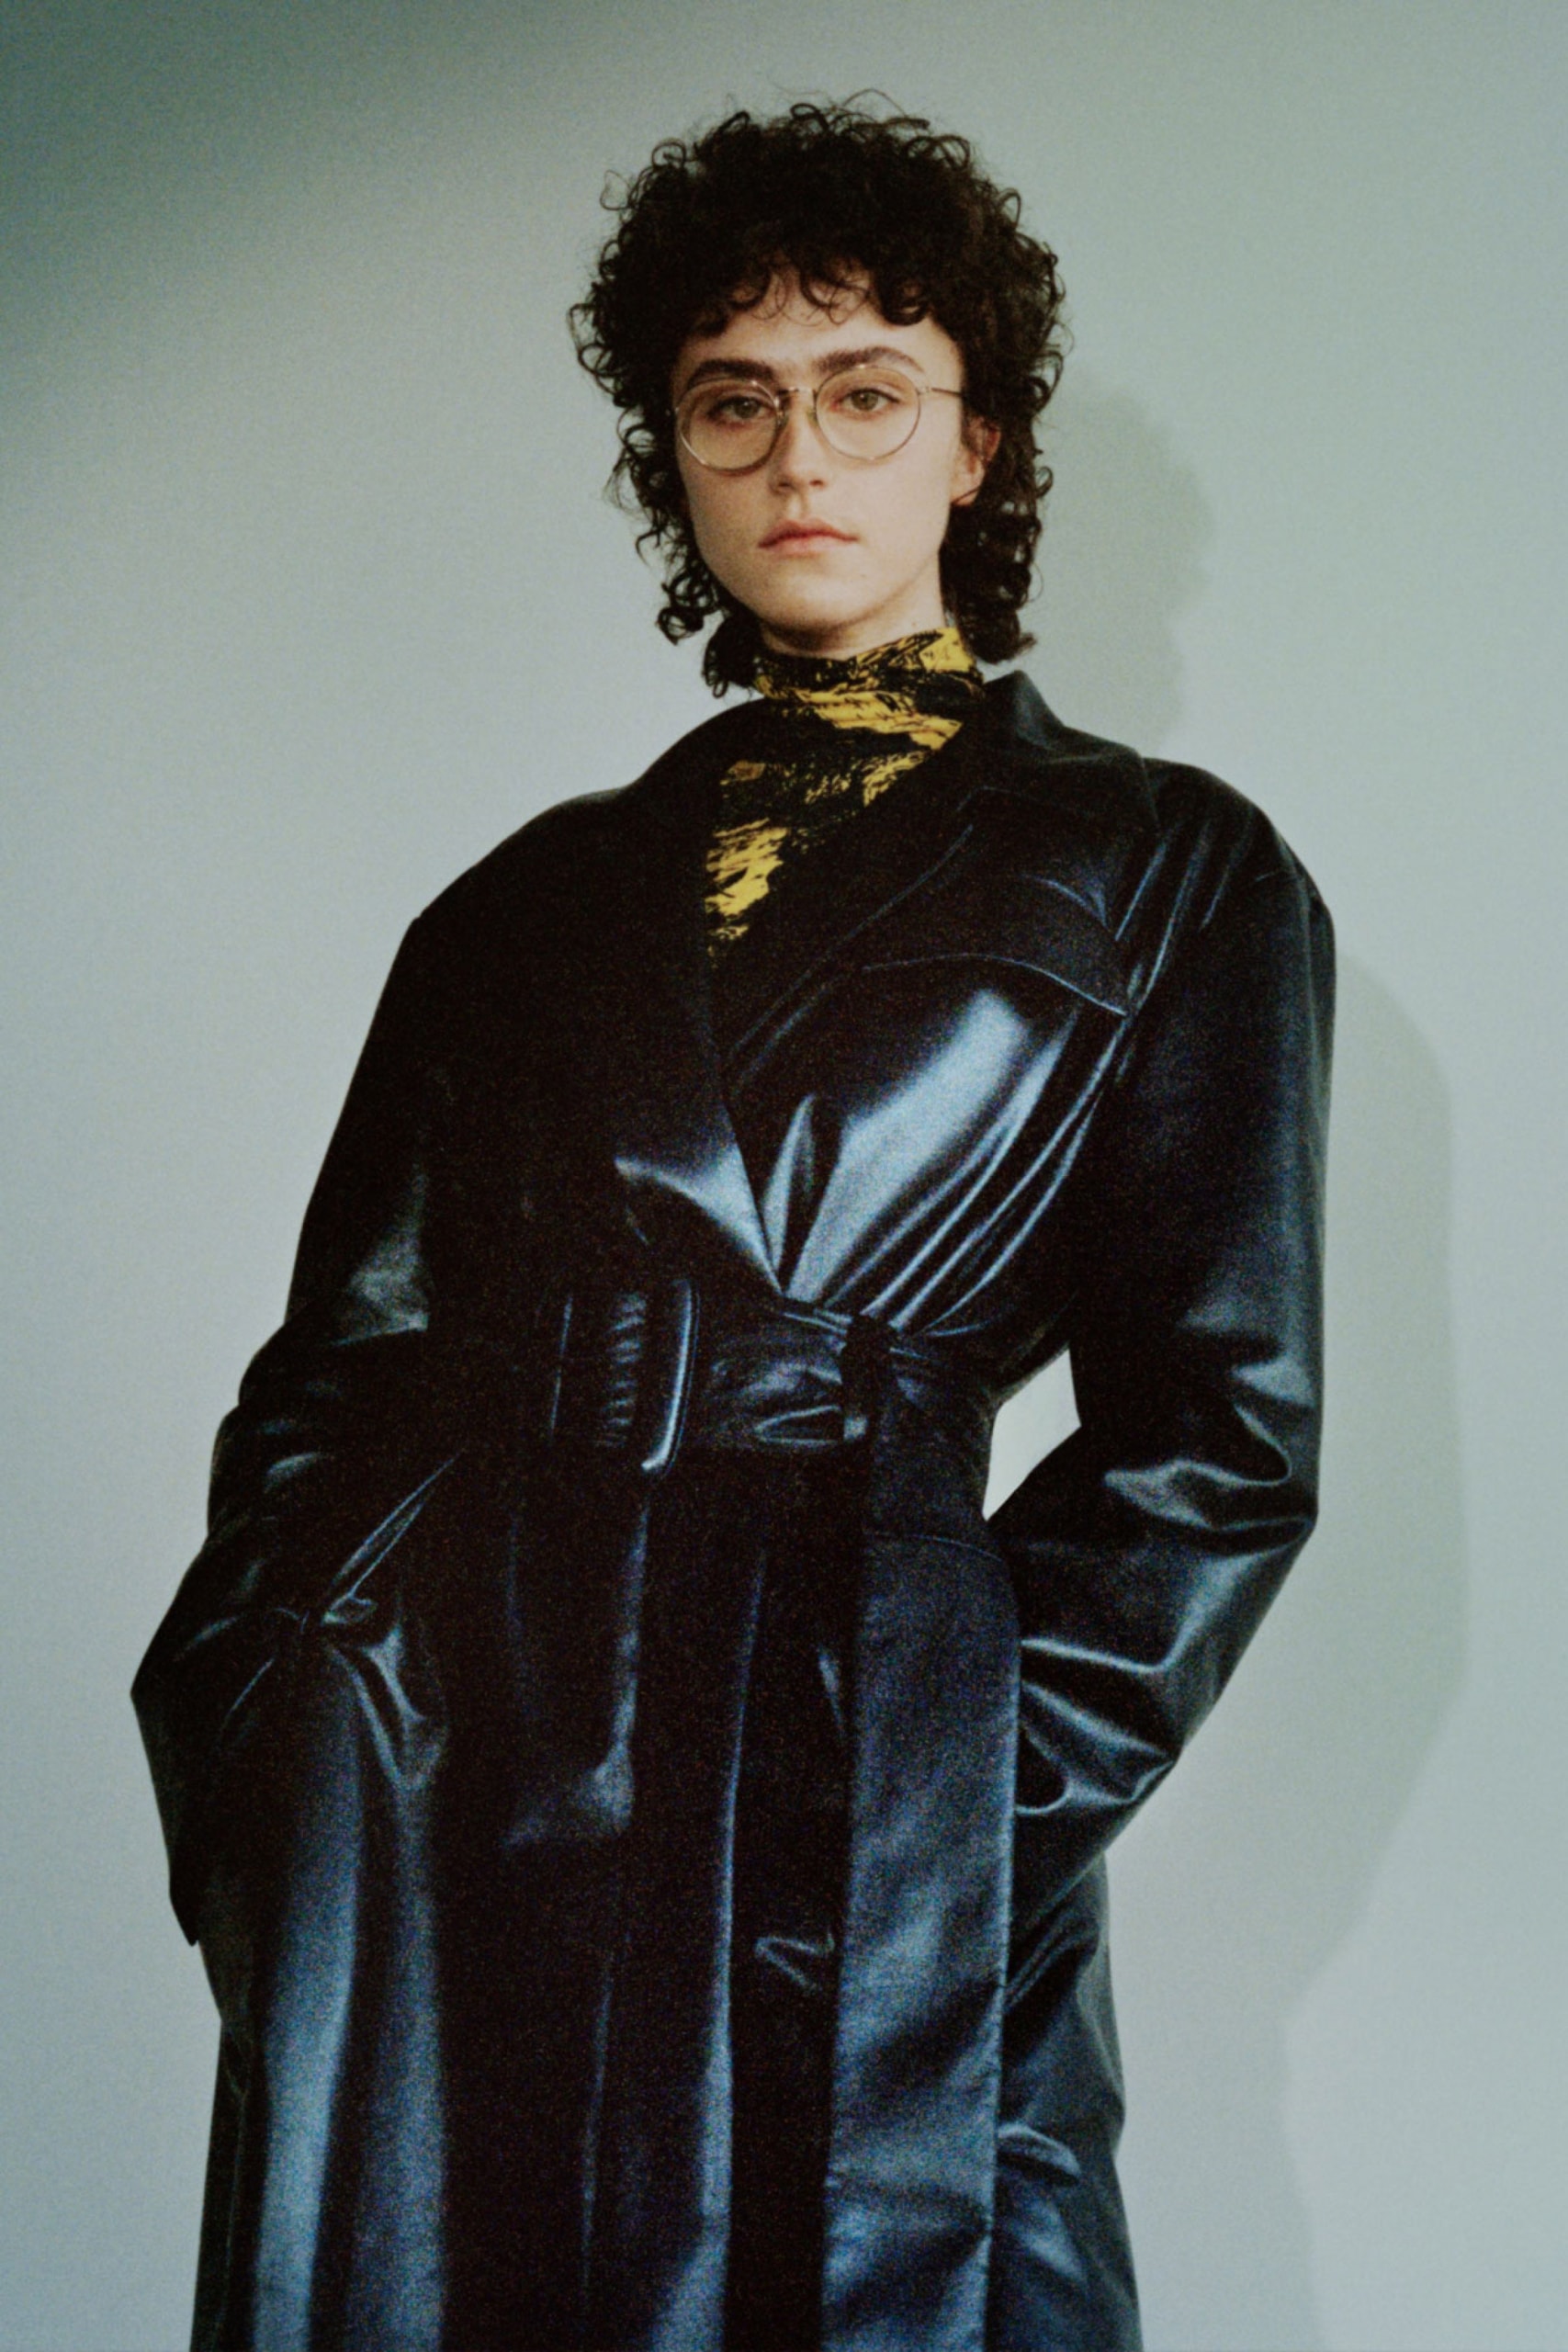 proenza schouler fall winter 2021 fw21 collection lookbook new york fashion week nyfw ella emhoff leather coat